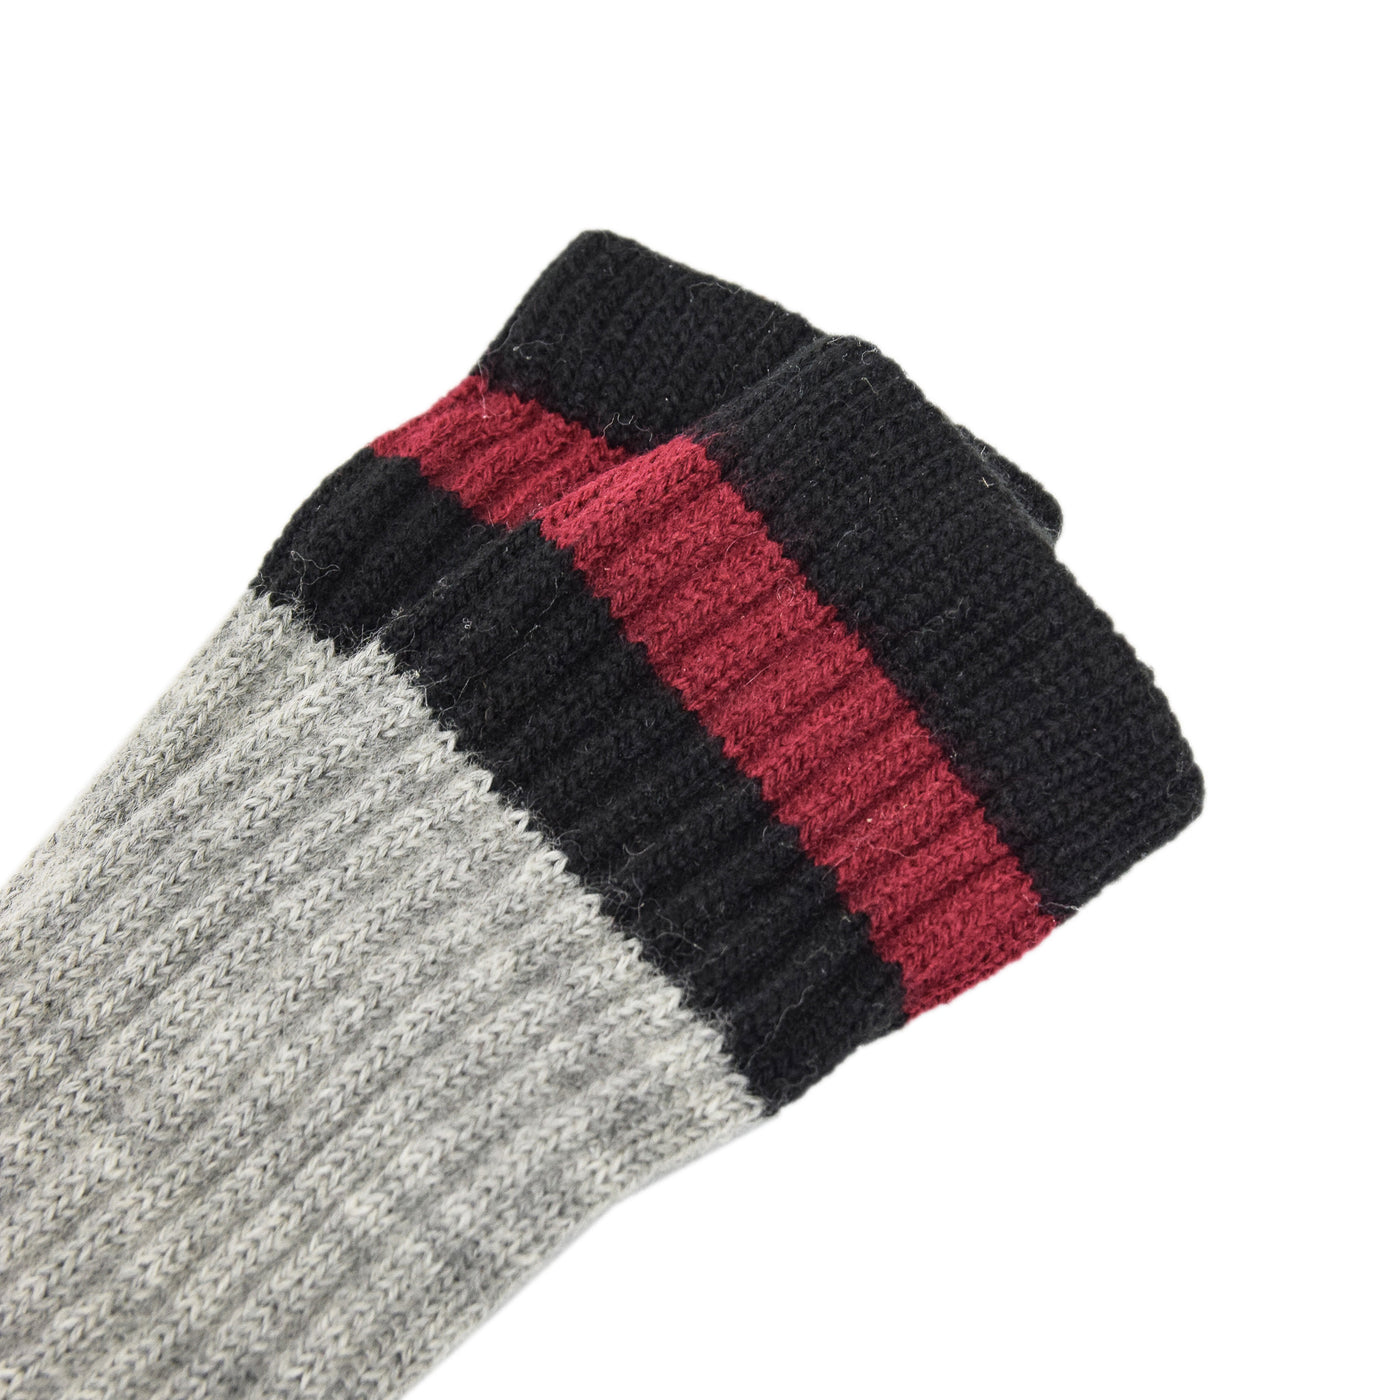 Red Wing Arctic wool Socks cuff